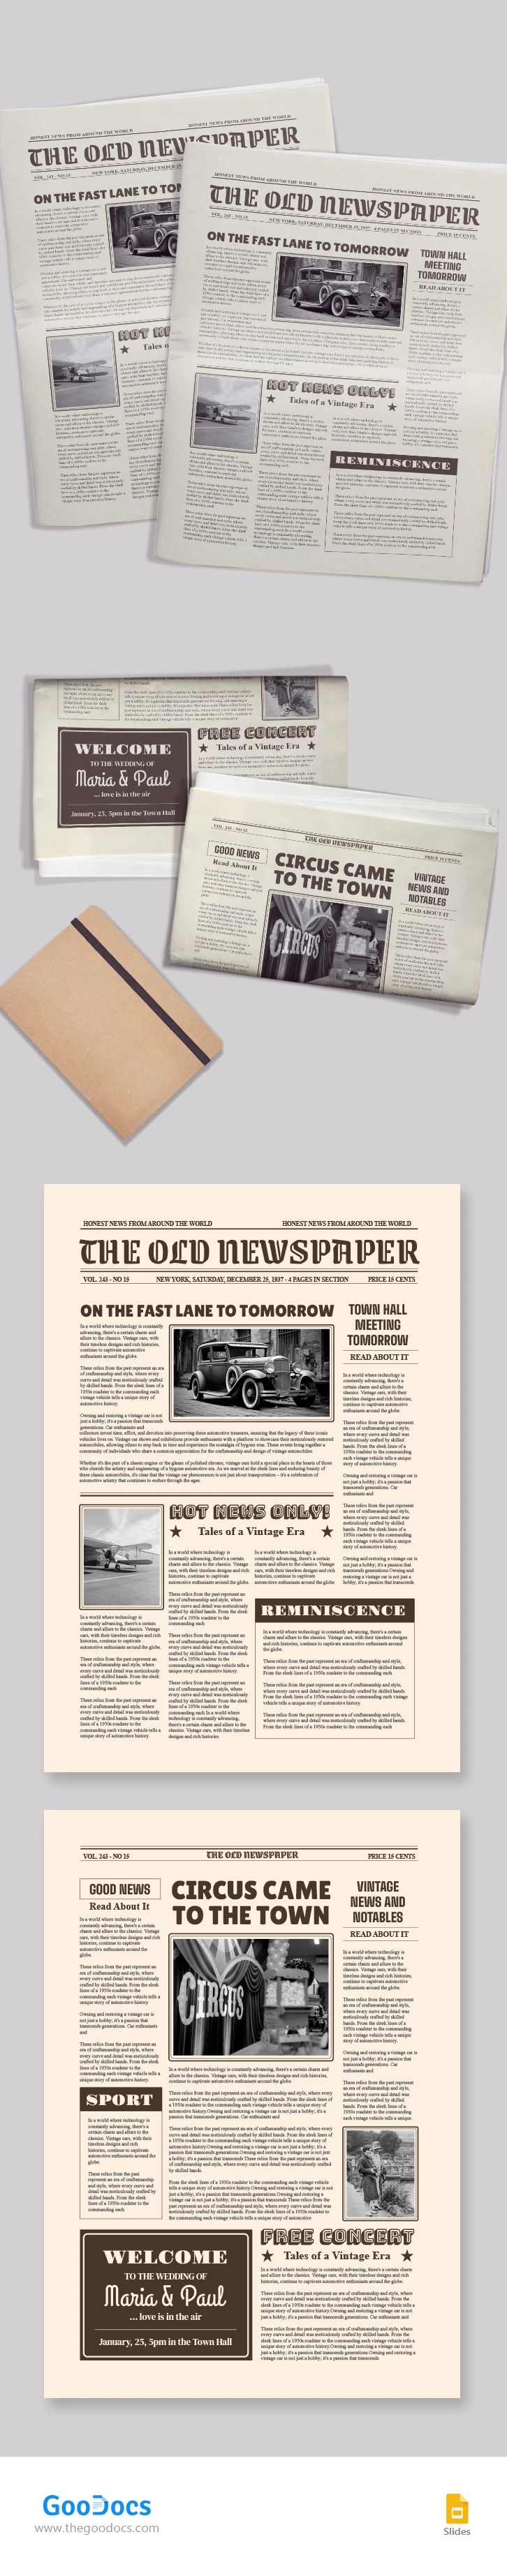 Brown Vintage Newspaper - free Google Docs Template - 10067536